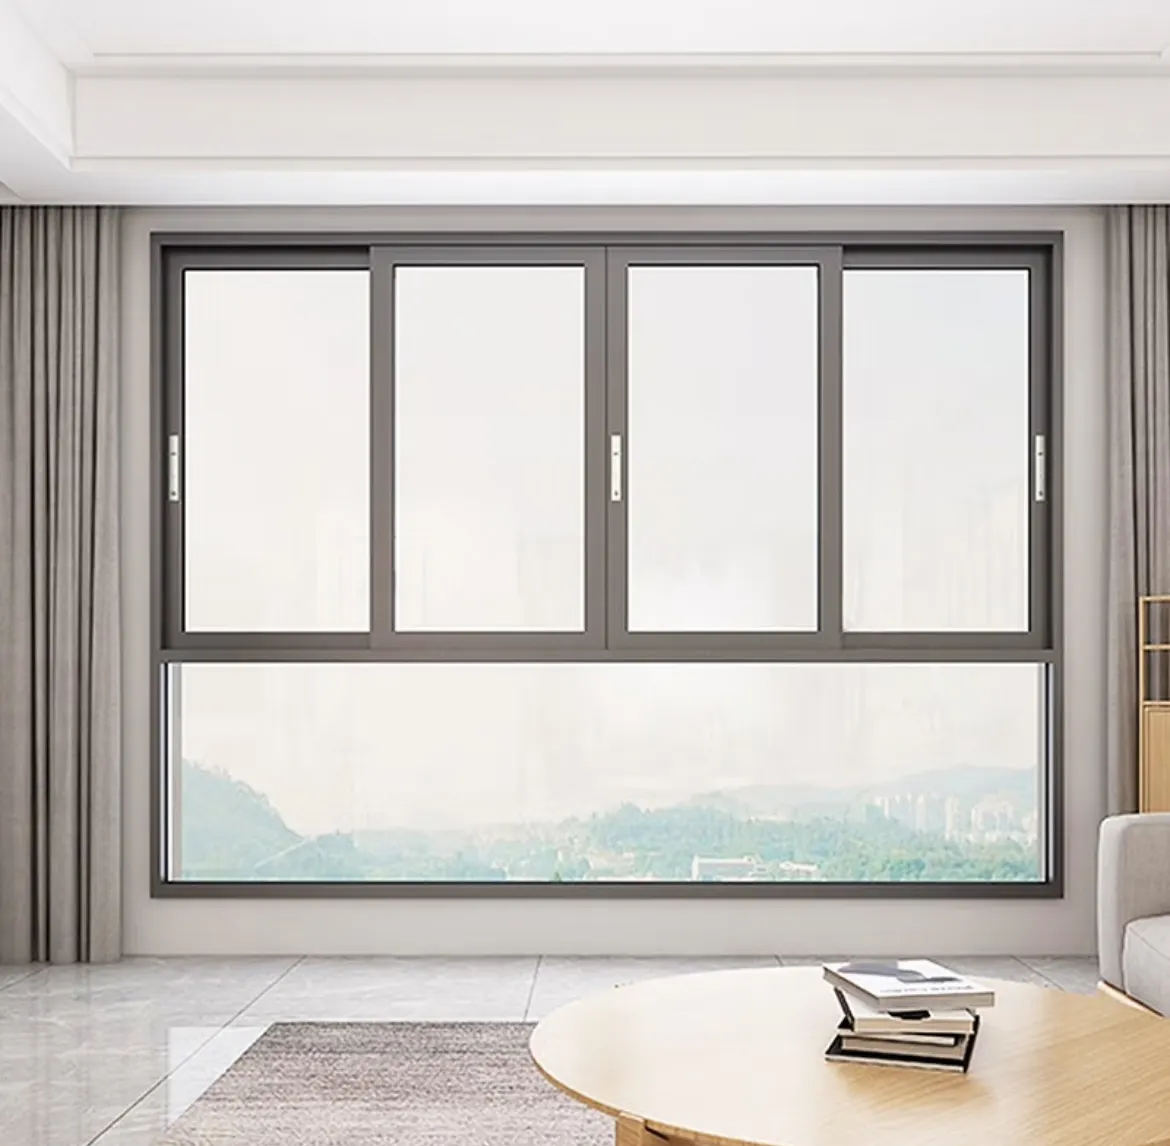 Ventana deslizante de apartamento de alta calidad Diseño de ventana corredera de vidrio de aluminio